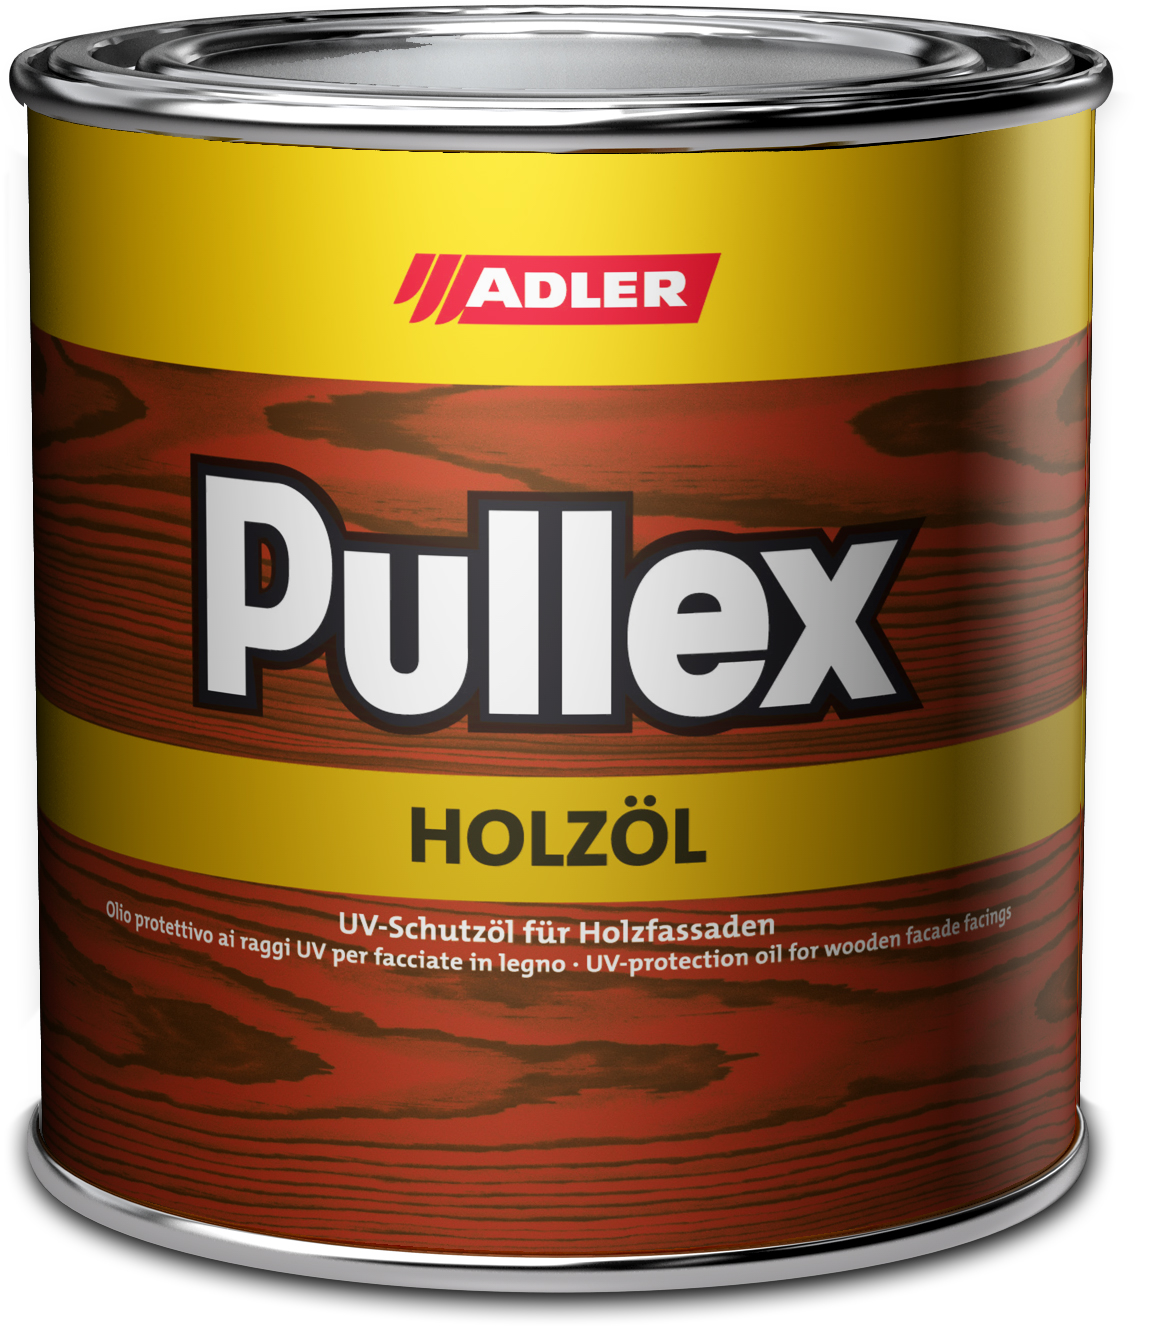 Adler Pullex Holzöl Natur,0.75L